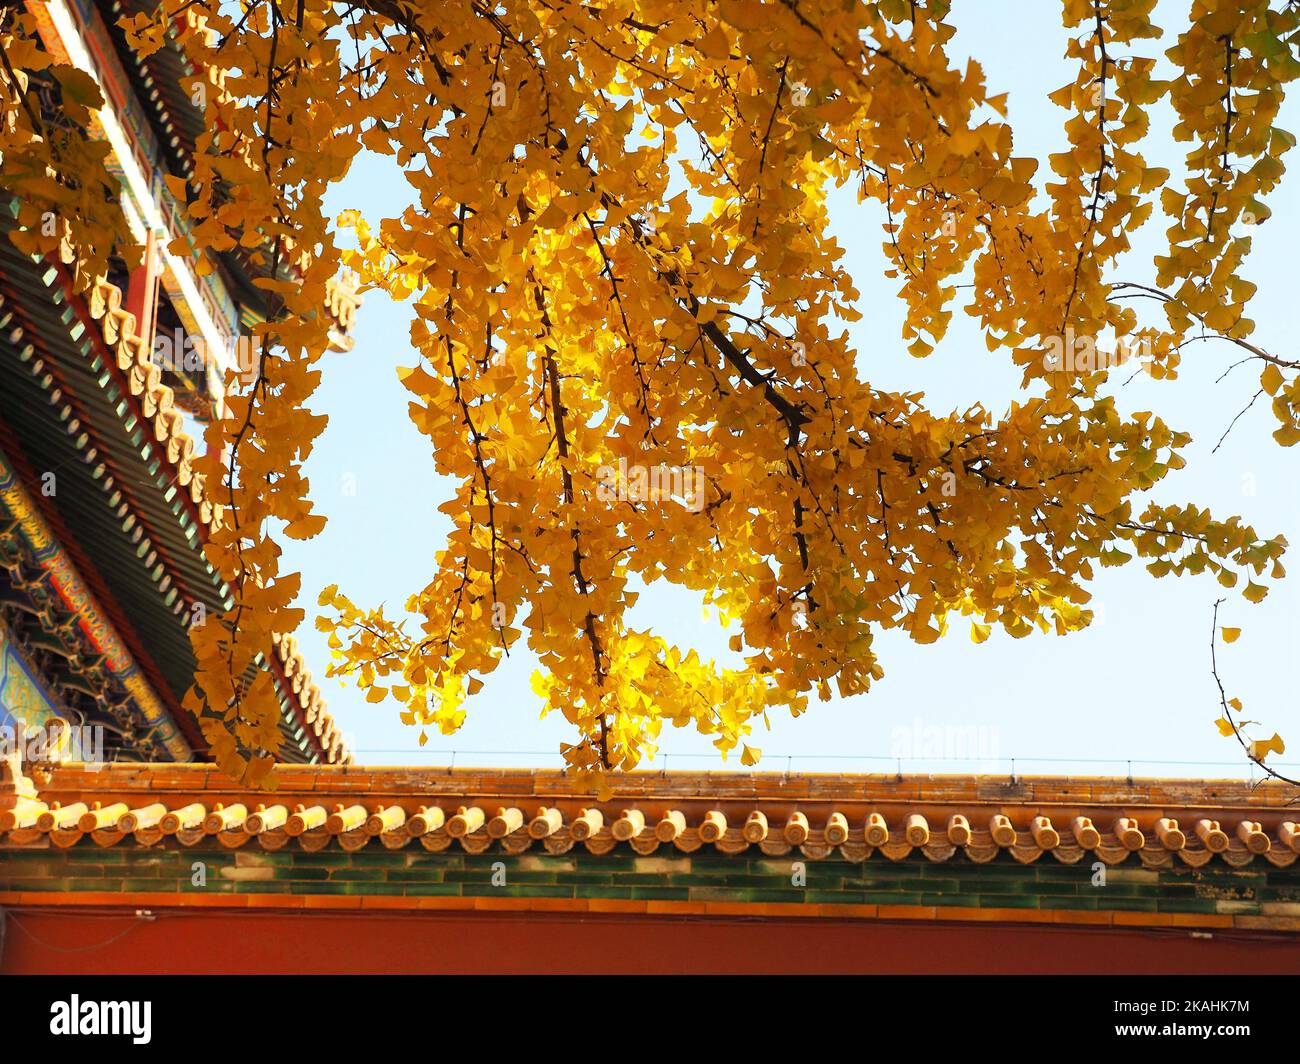 BEIJING, CHINA - NOVEMBER 3, 2022 - Autumn scenery of the Palace Museum in Beijing, capital of China, Nov 3, 2022. Stock Photo